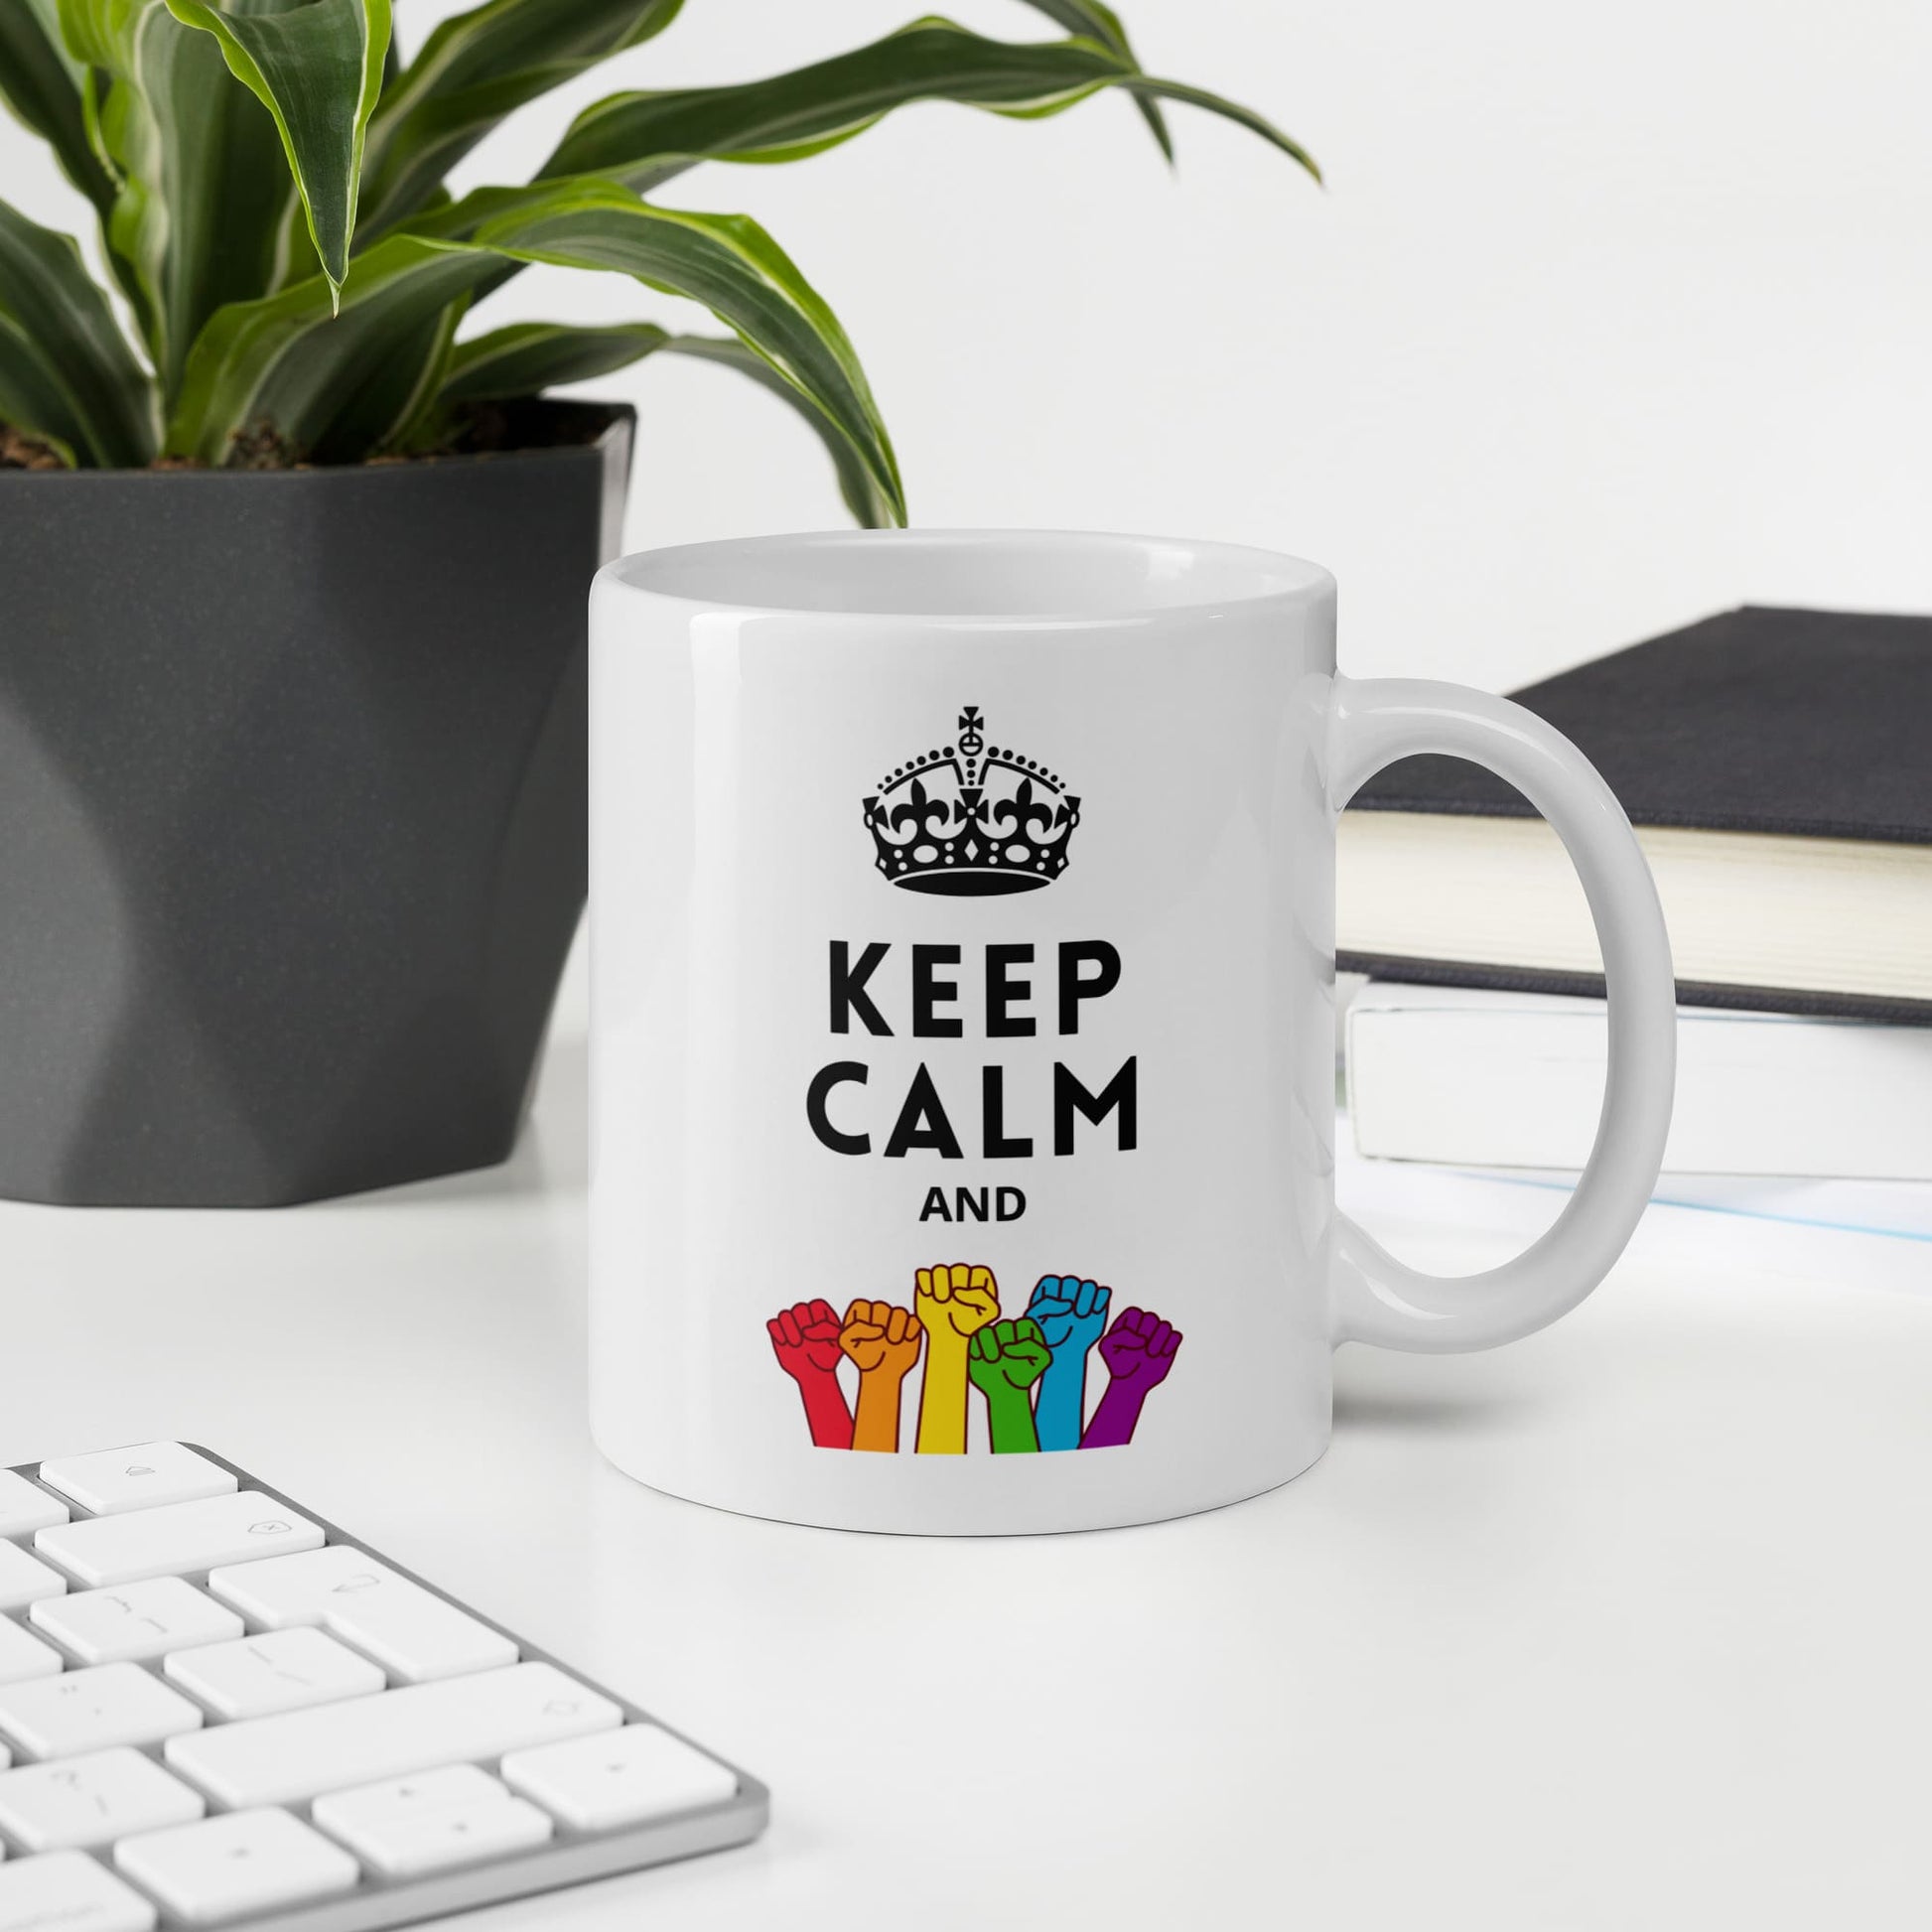 pride mug, fight LGBTQ rights coffee or tea cup on desk